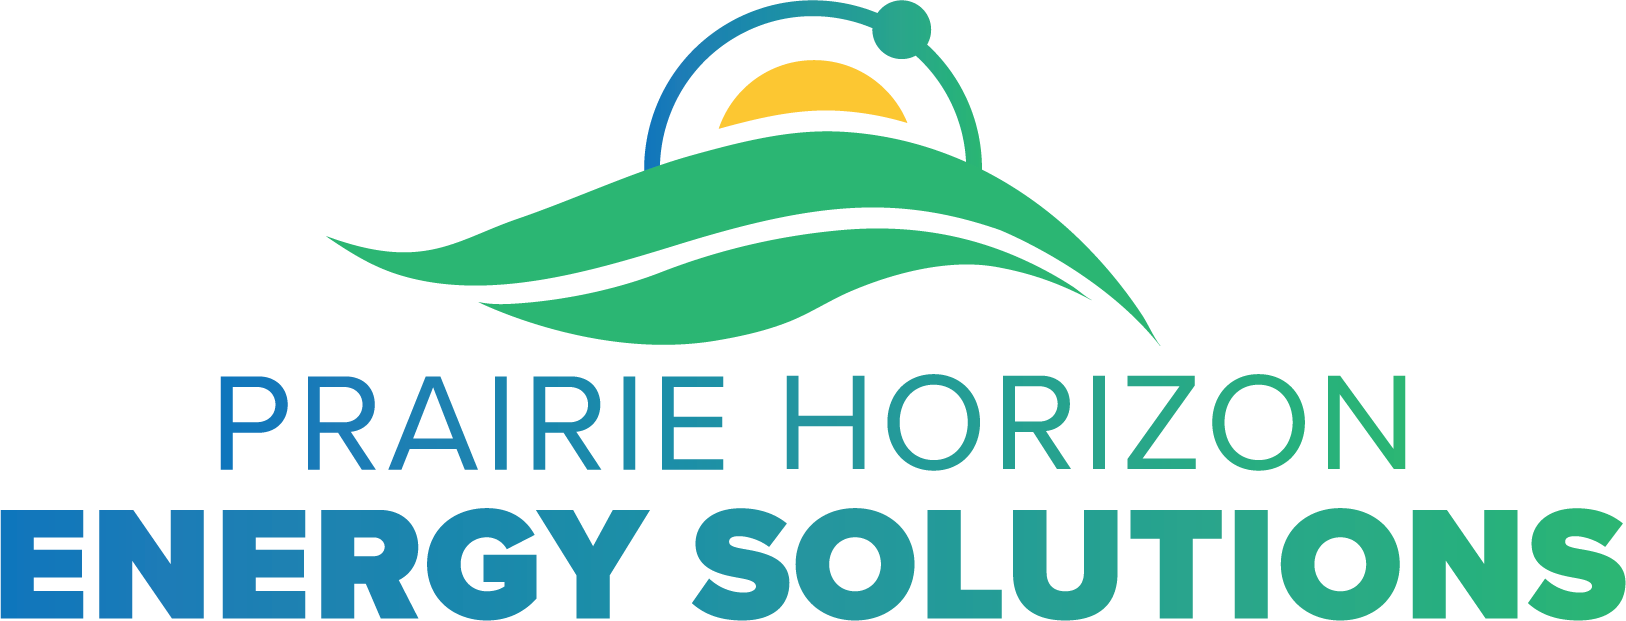 Prairie Horizon Energy Solutions logo